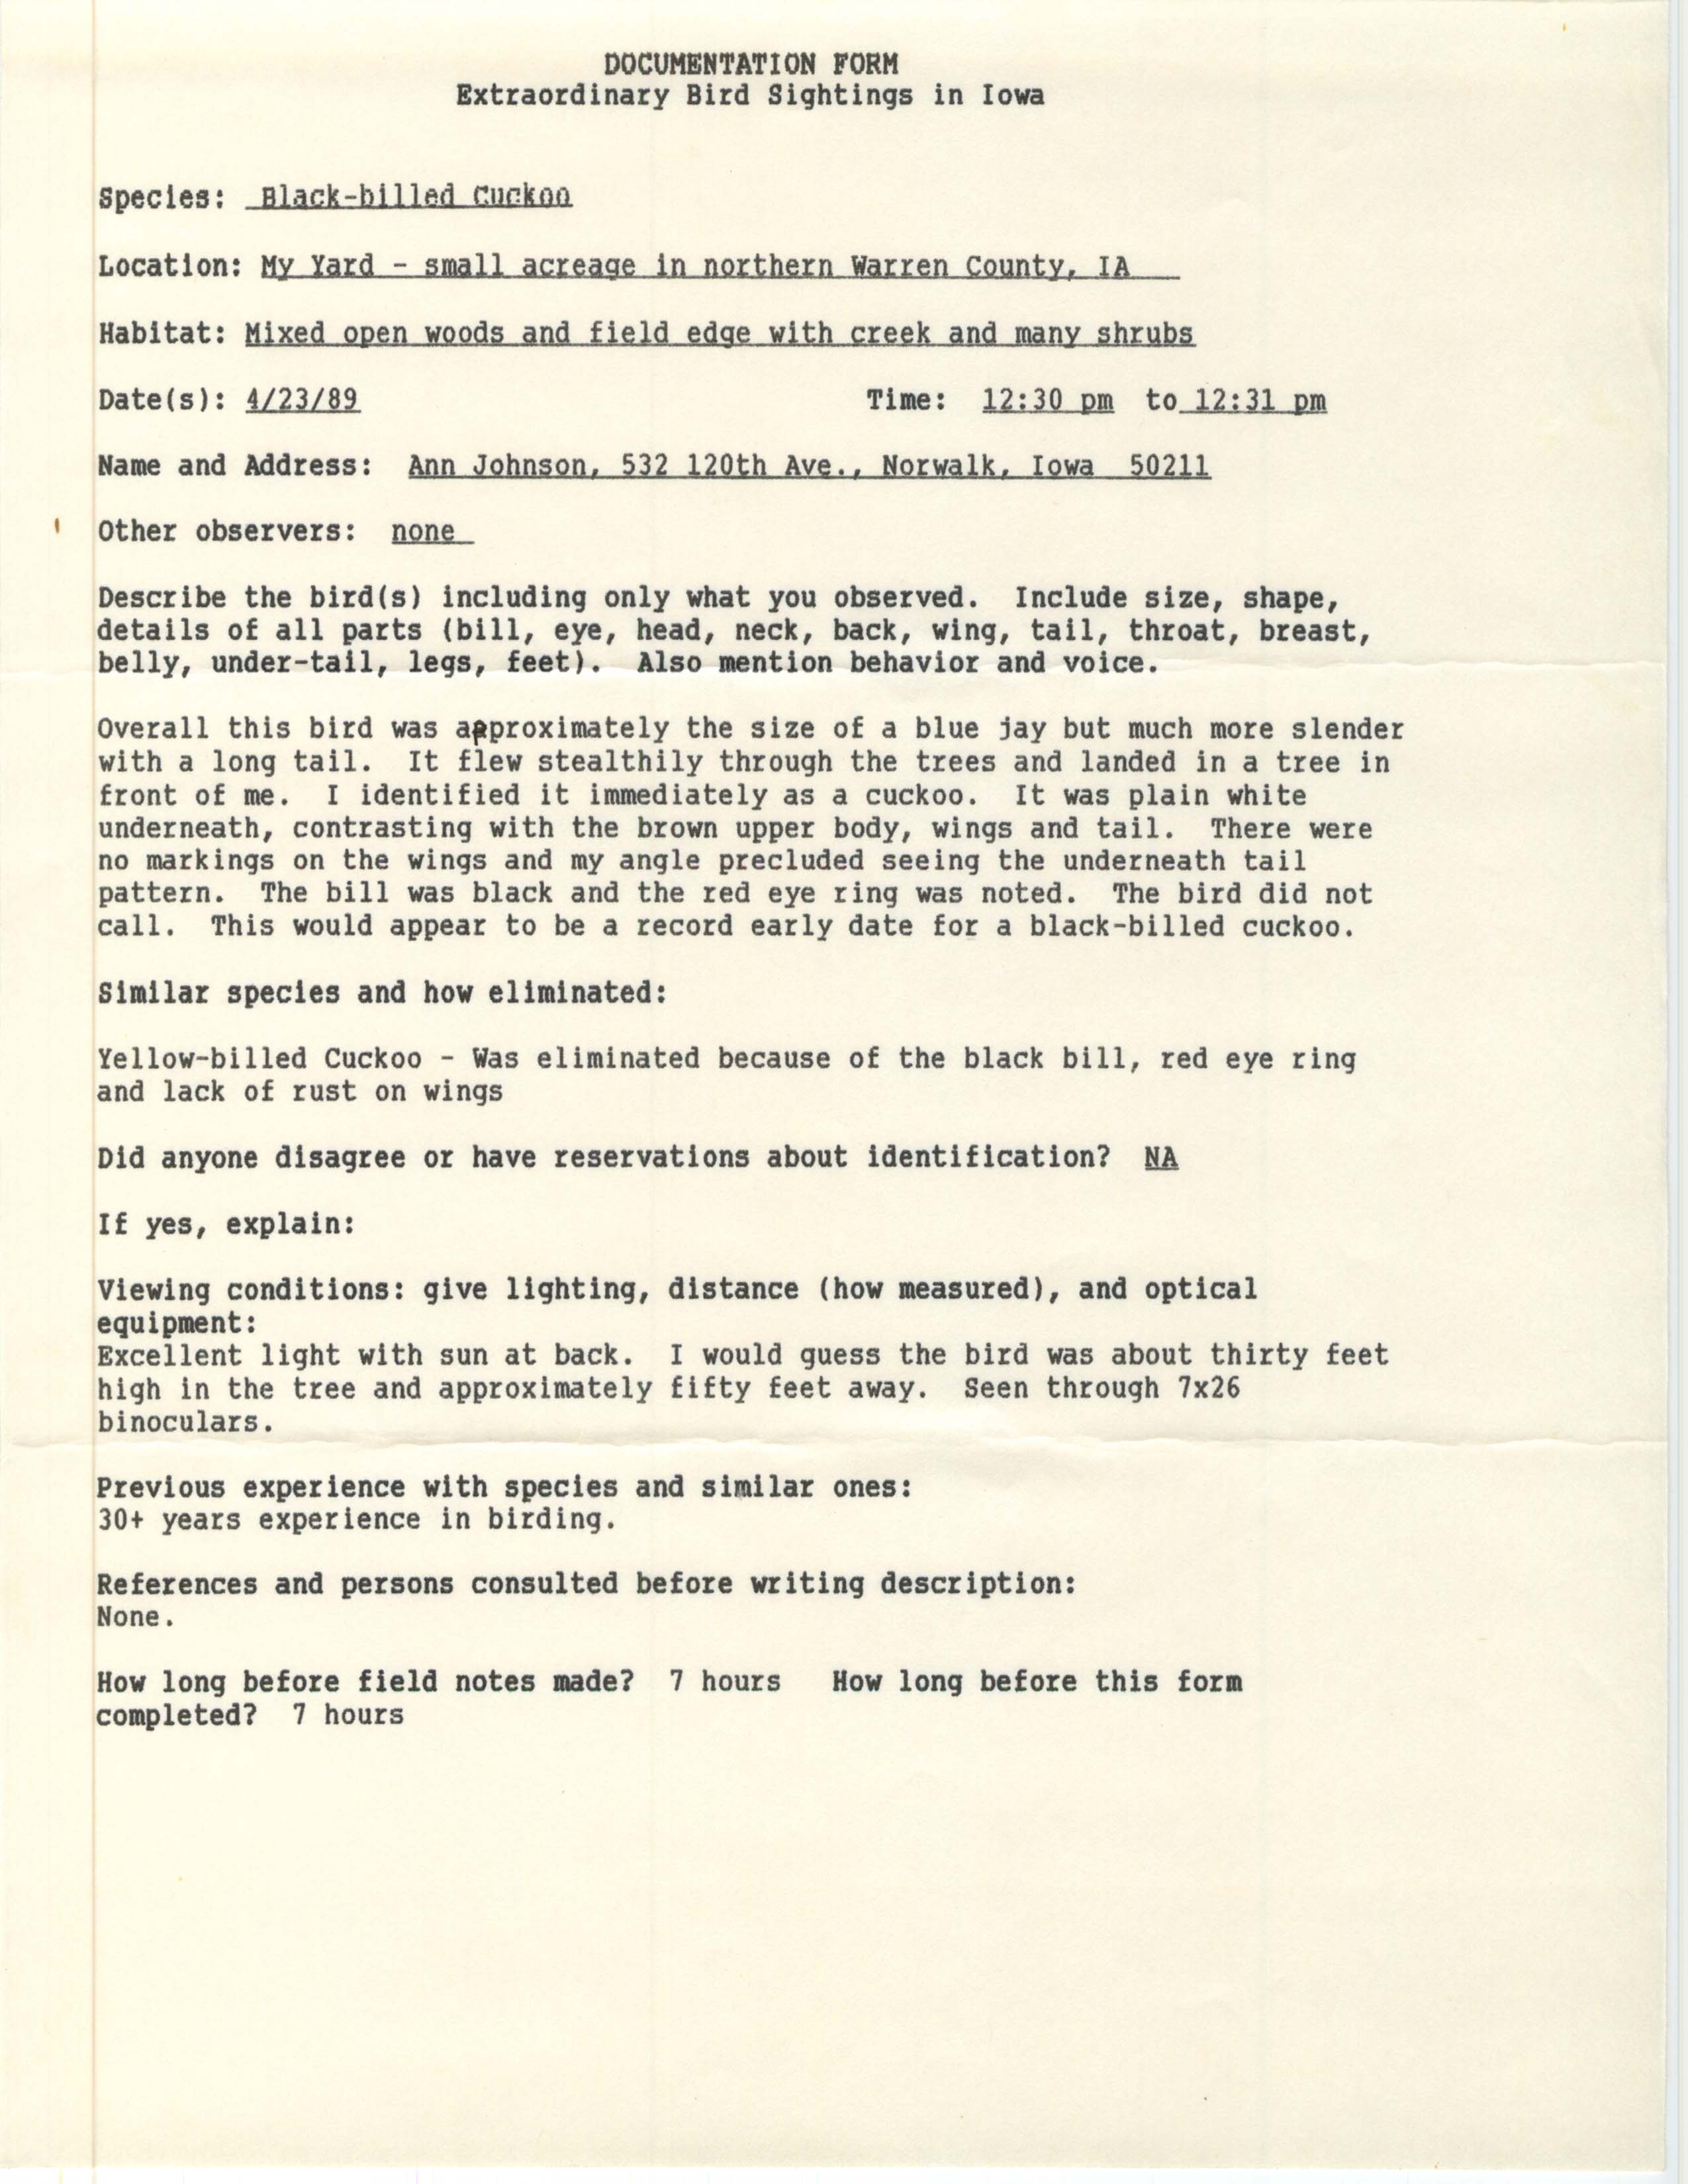 Rare bird documentation form for Black-billed Cuckoo at Norwalk, 1989